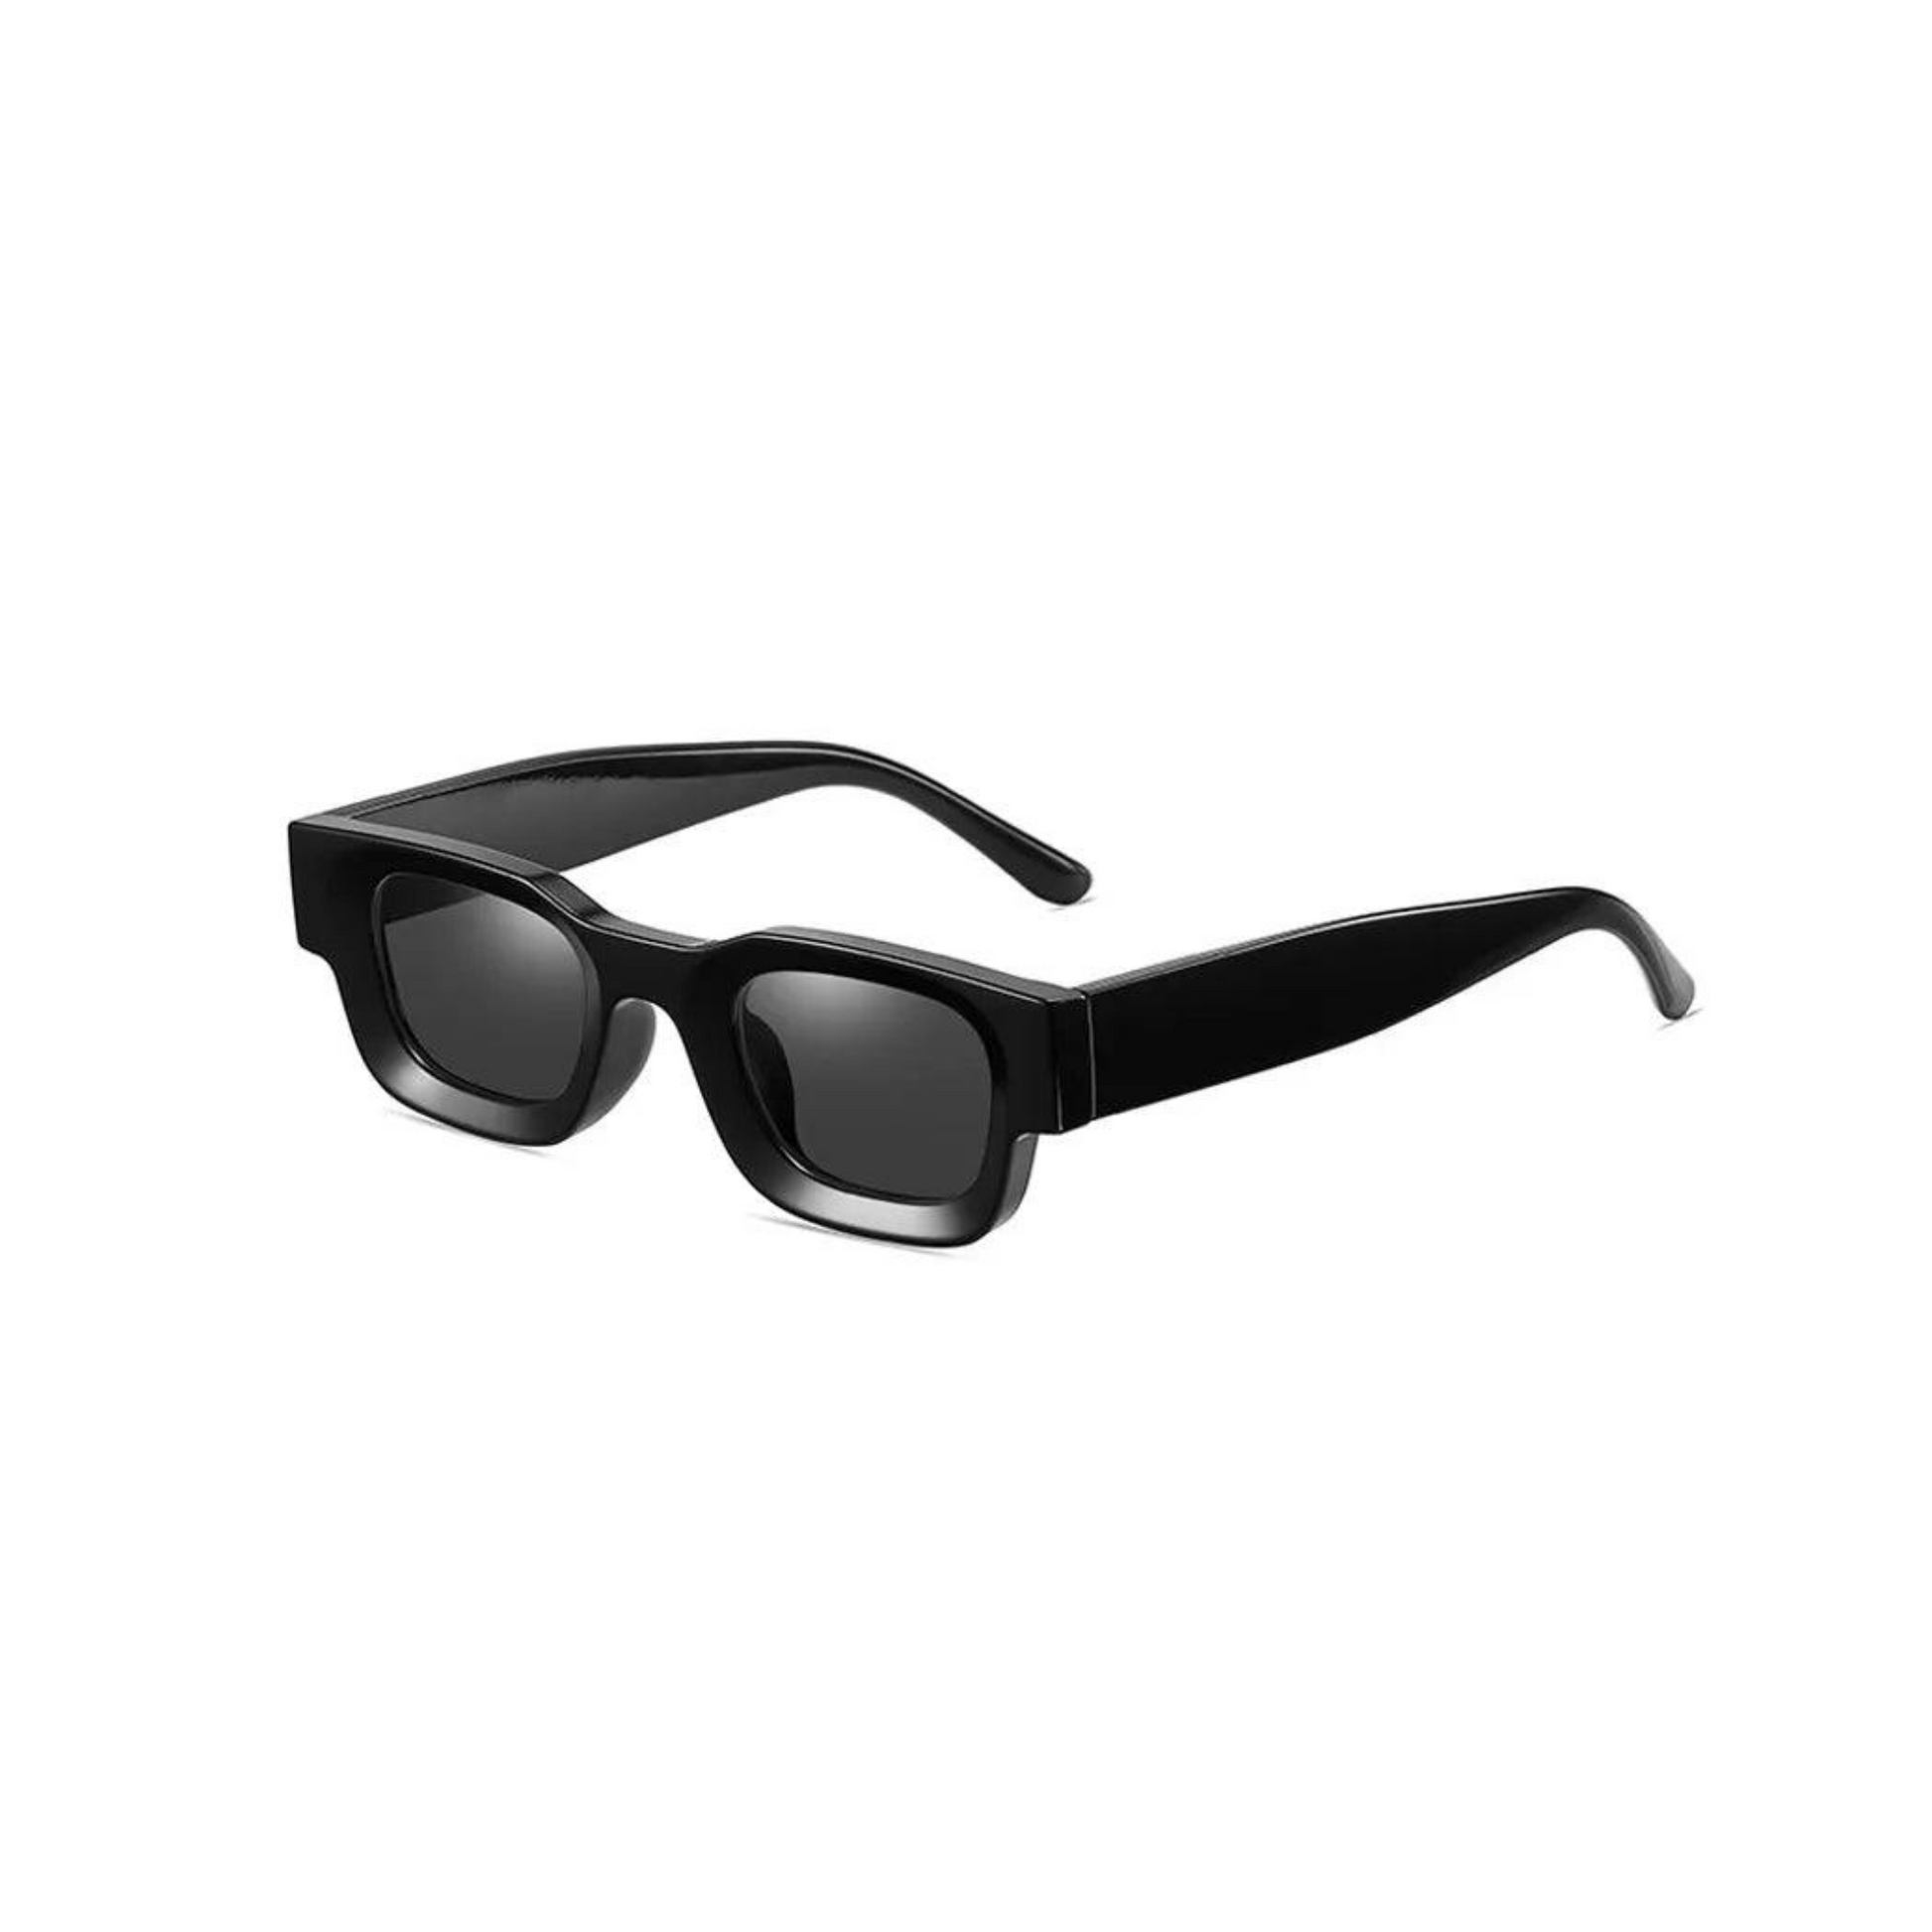 Grey Sunglasses Eyewear Festival Fashion Concert Rave Outfit Party boho style